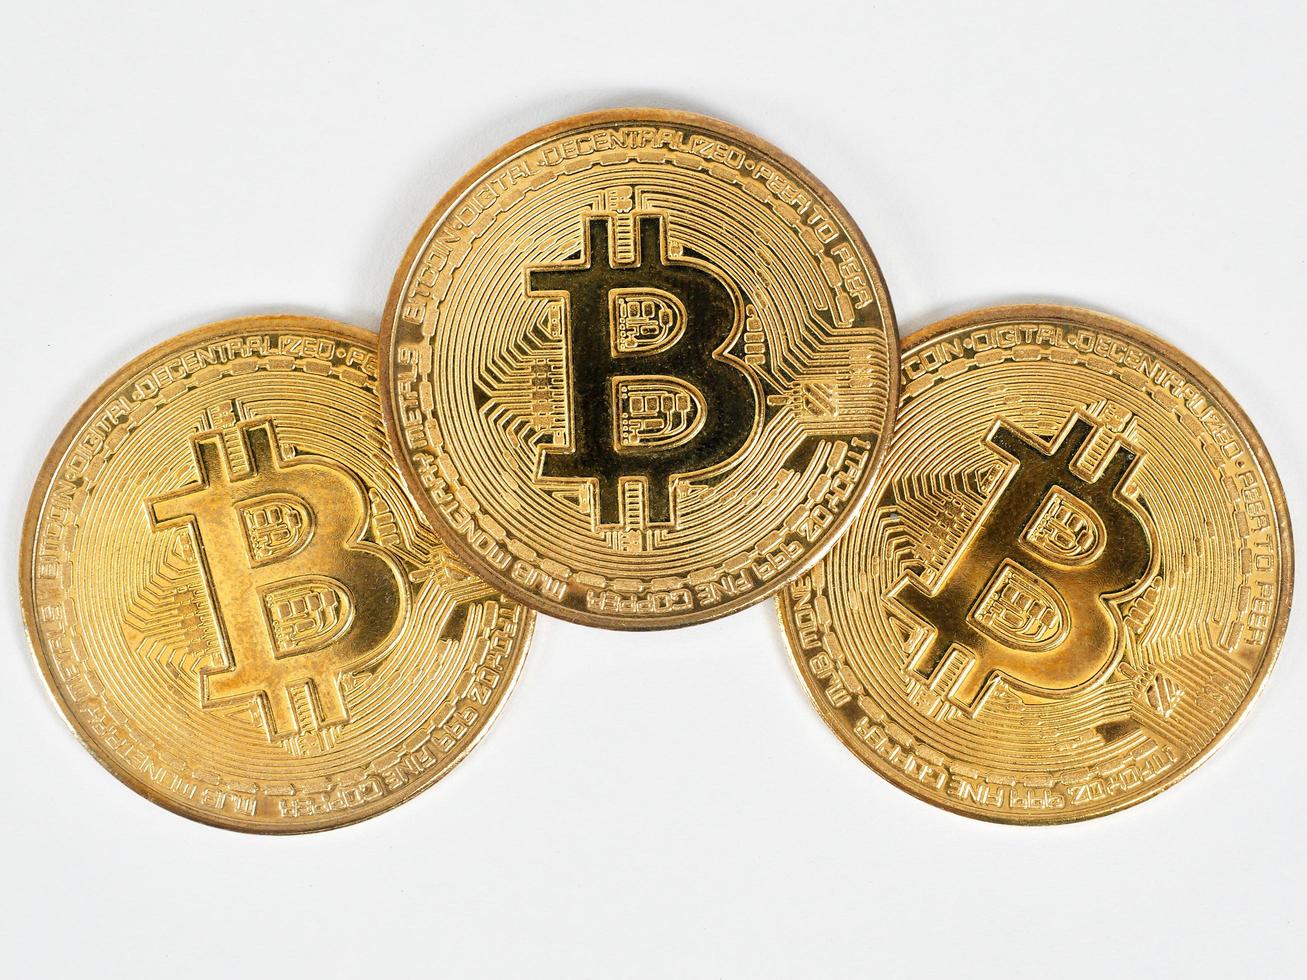 detailopname drie gouden bitcoins detail Aan wit achtergrond foto